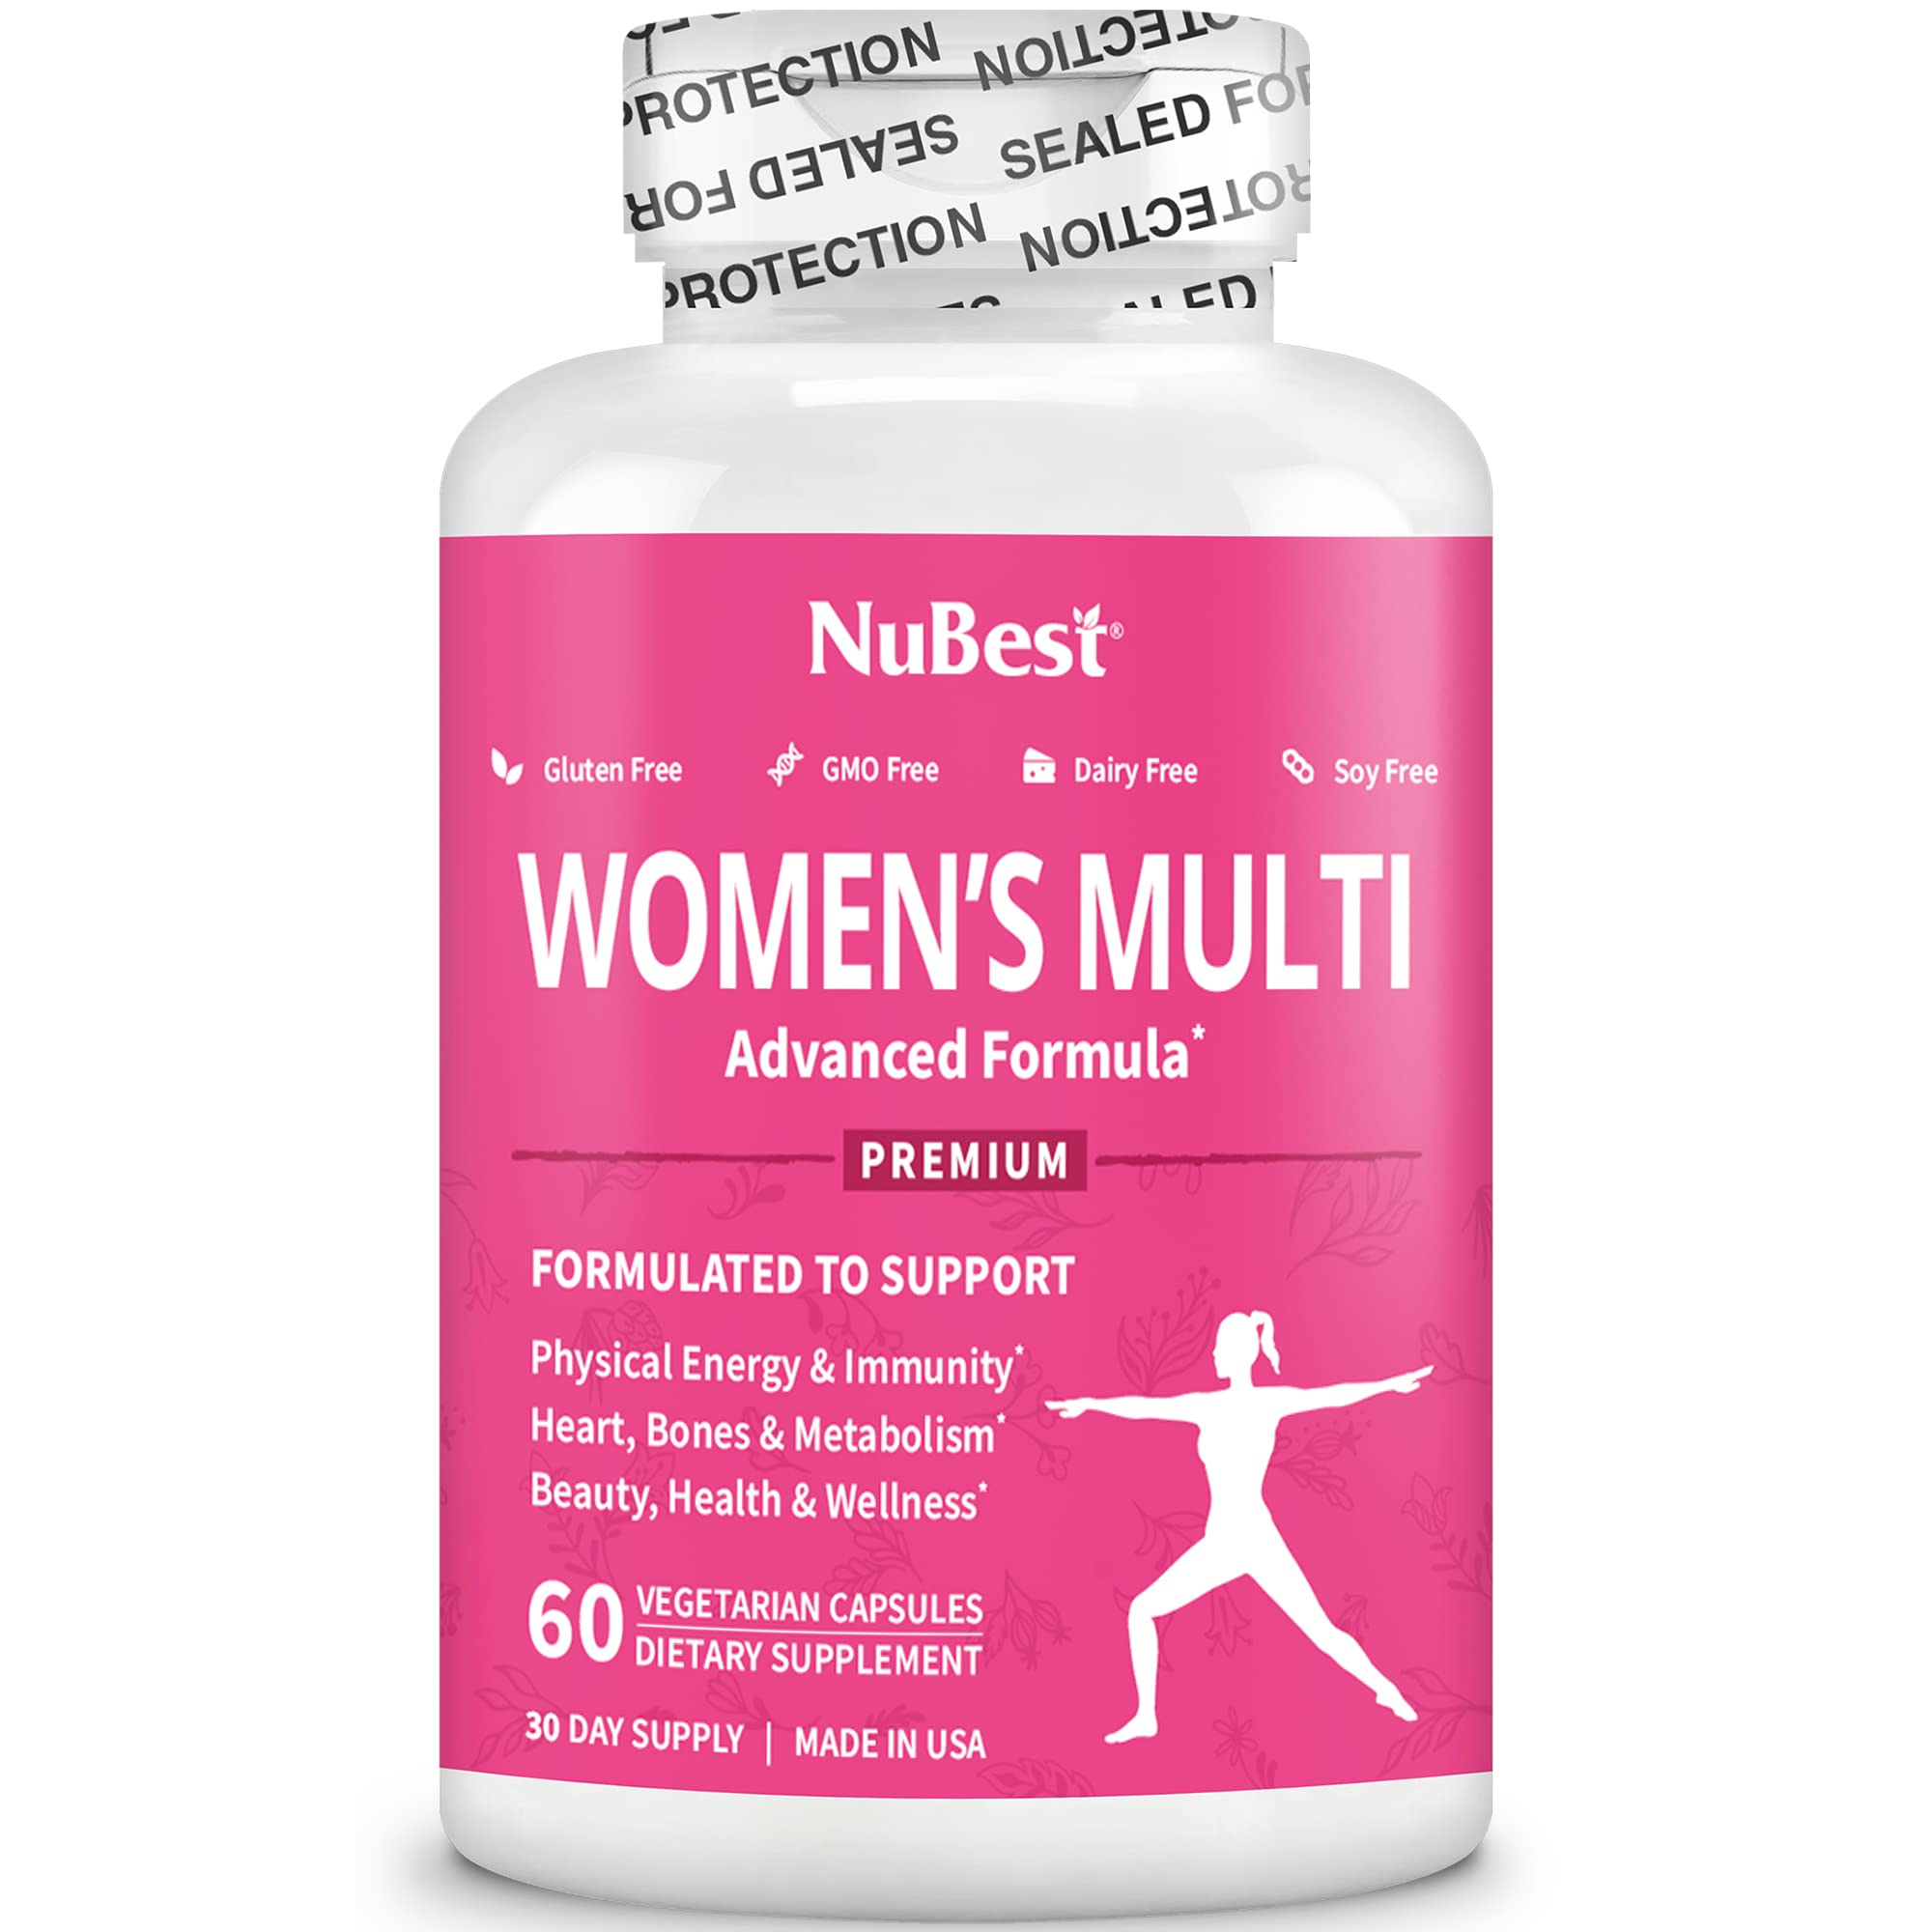 Women’s Multi 18+ by NuBest - Support Immunity, Energy, Bones, Heart & Wellness - Vitamins A, C, D, E, B1, B2, B6, B12, Biotin, Calcium, Zinc, Copper, Spirulina & More - 60 vegan caps | 1 Month Supply